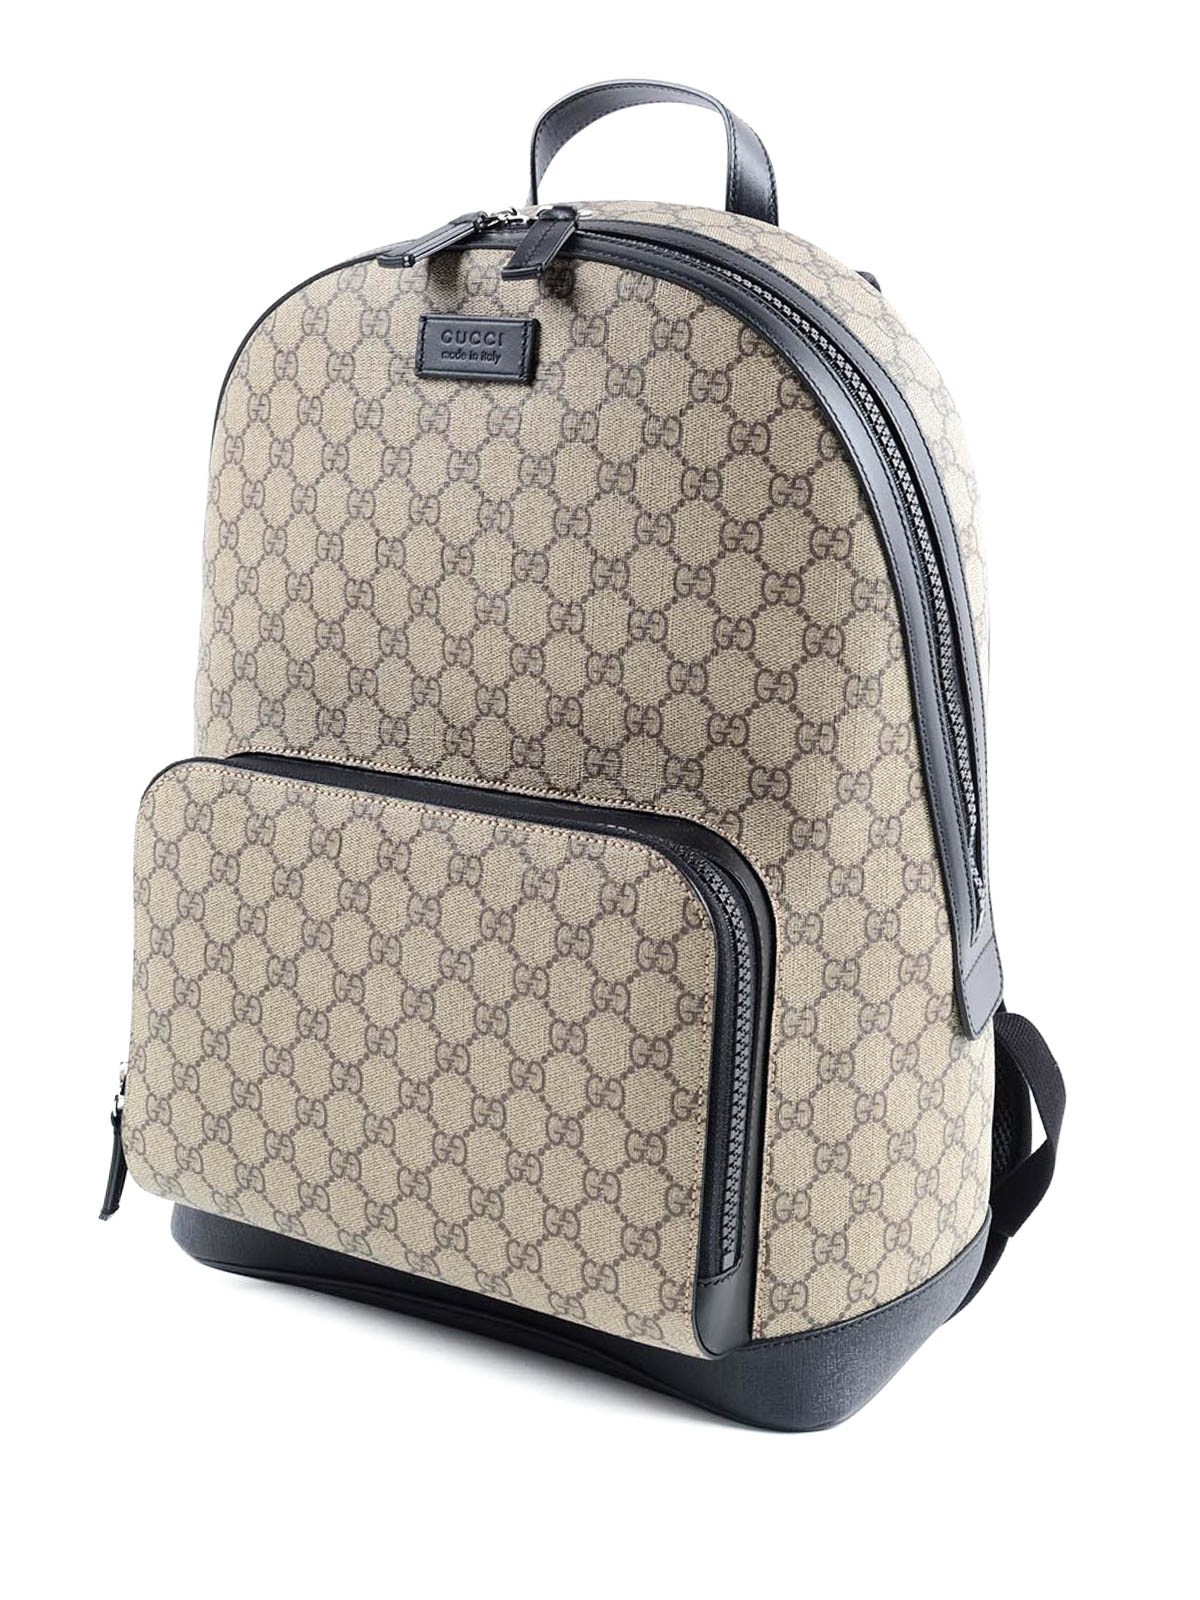 GG Supreme backpack by Gucci - backpacks | iKRIX